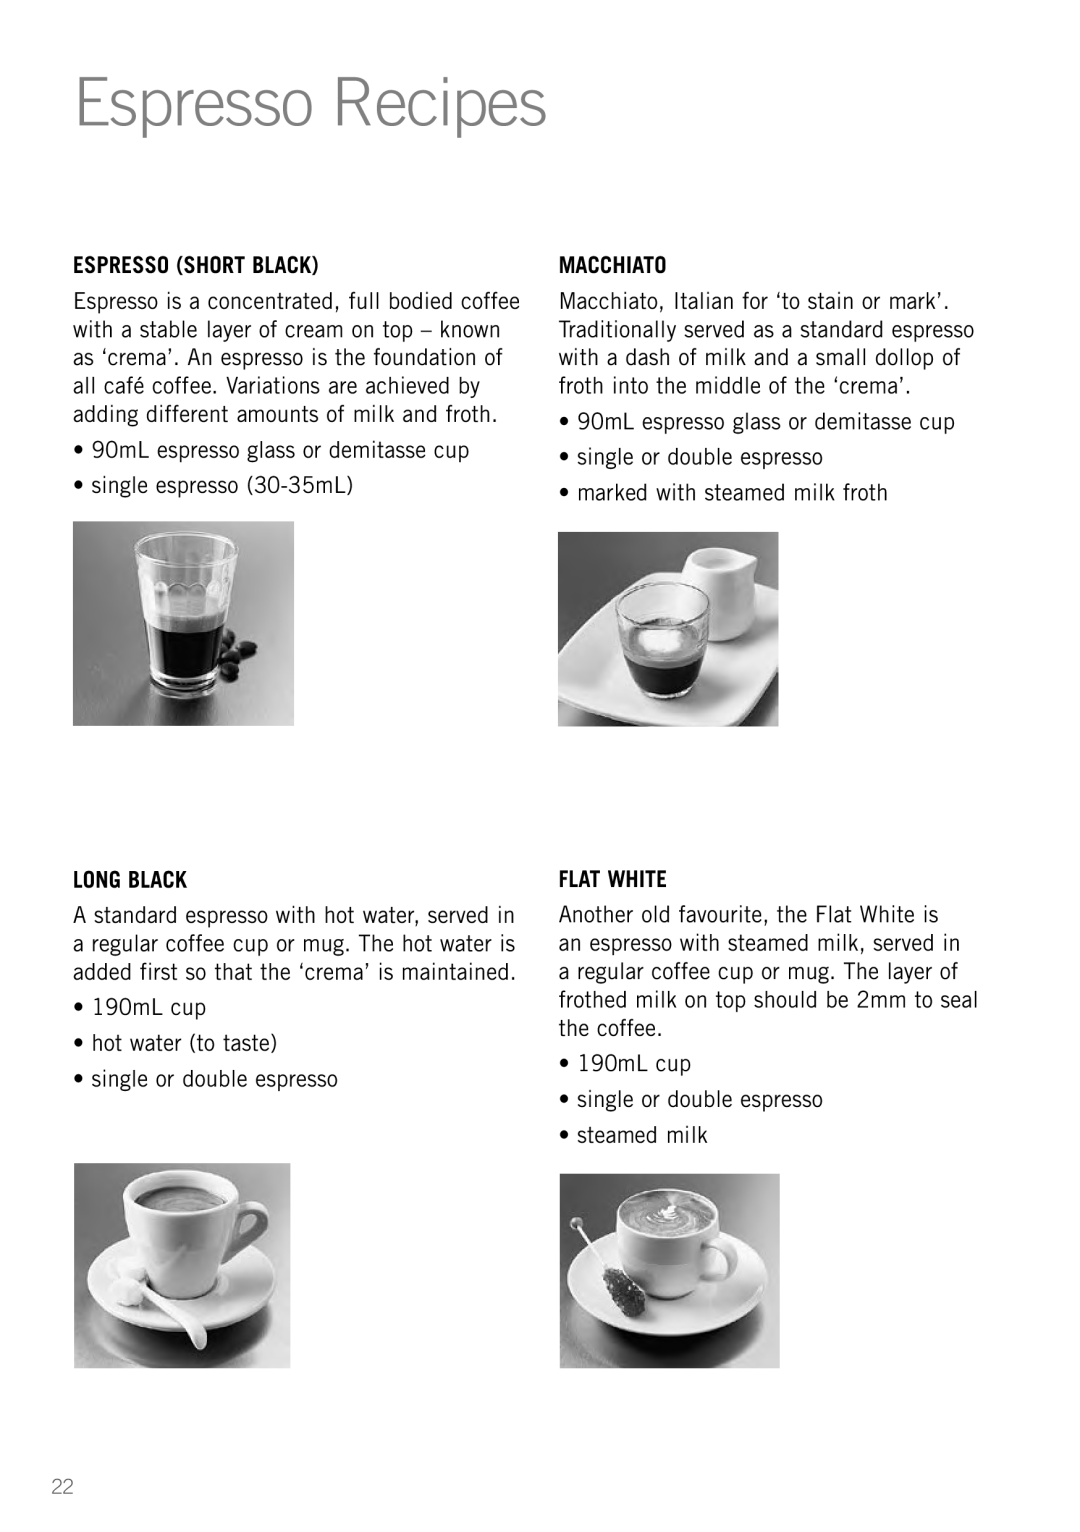 Sunbeam EM5800 manual Espresso Recipes, Espresso Short Black, Long Black, Macchiato, Flat White 